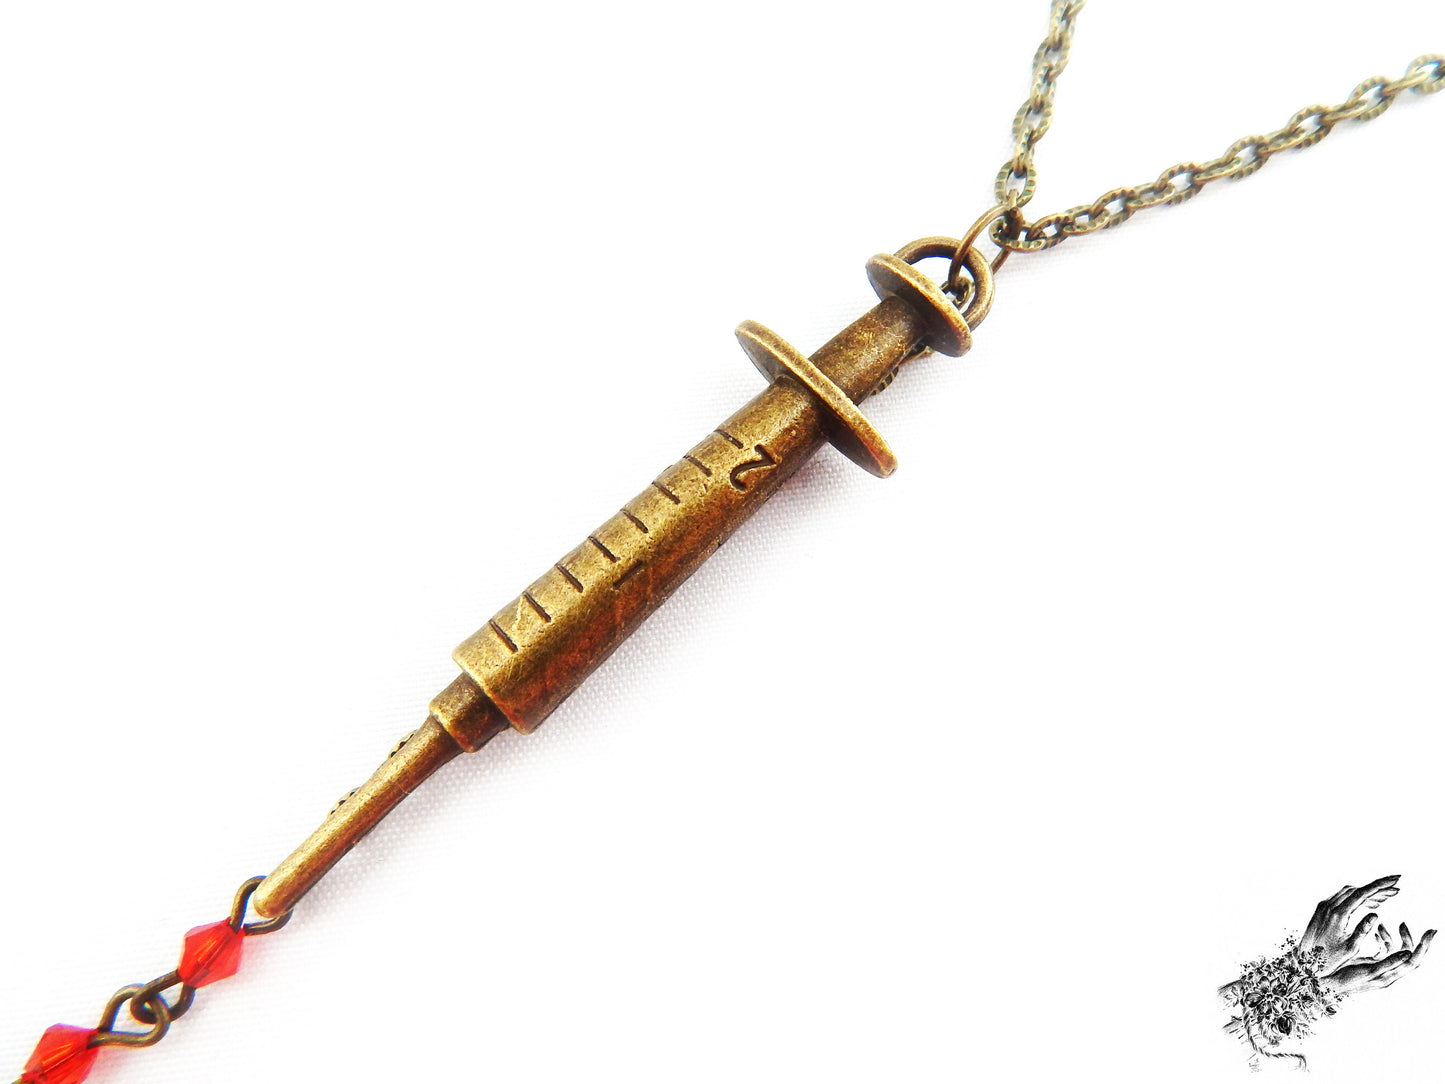 Antique Bronze Syringe Necklace